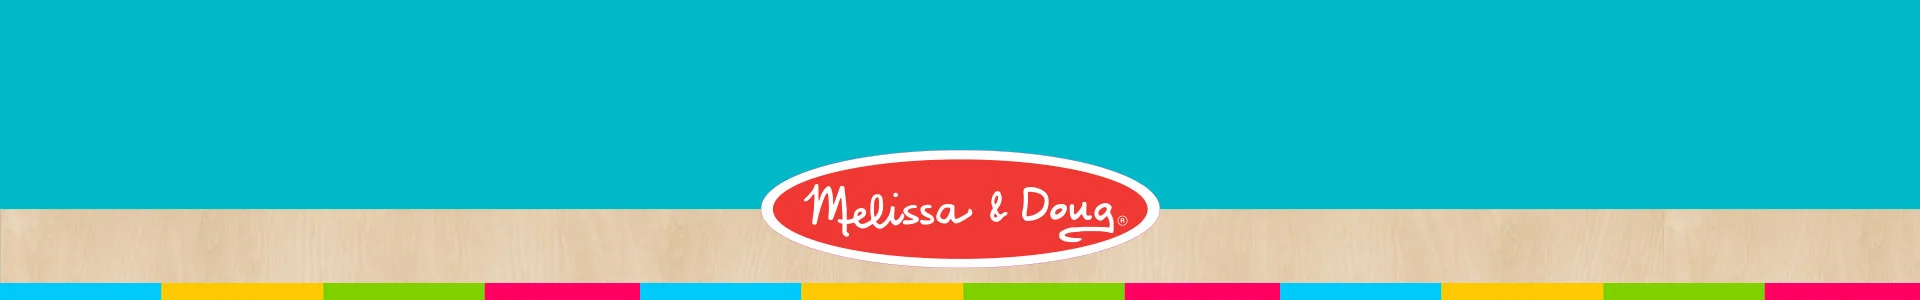 Melissa and Doug header